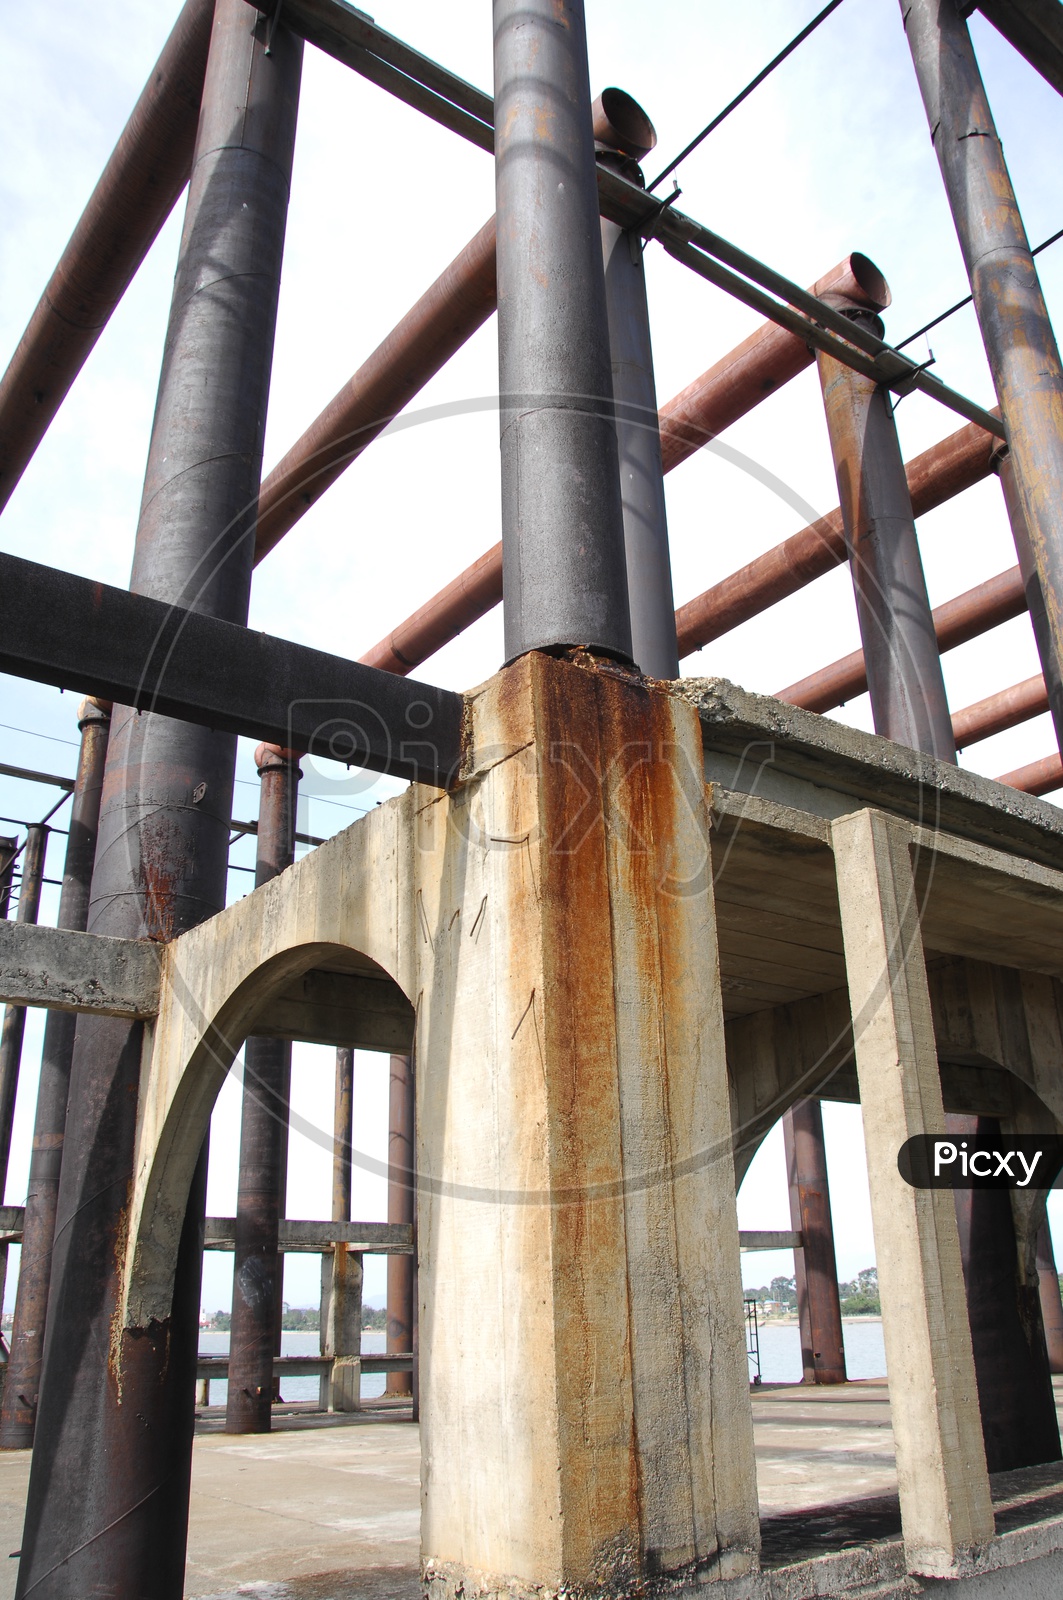 Iron Bars As Pillars In Reservoir Construction